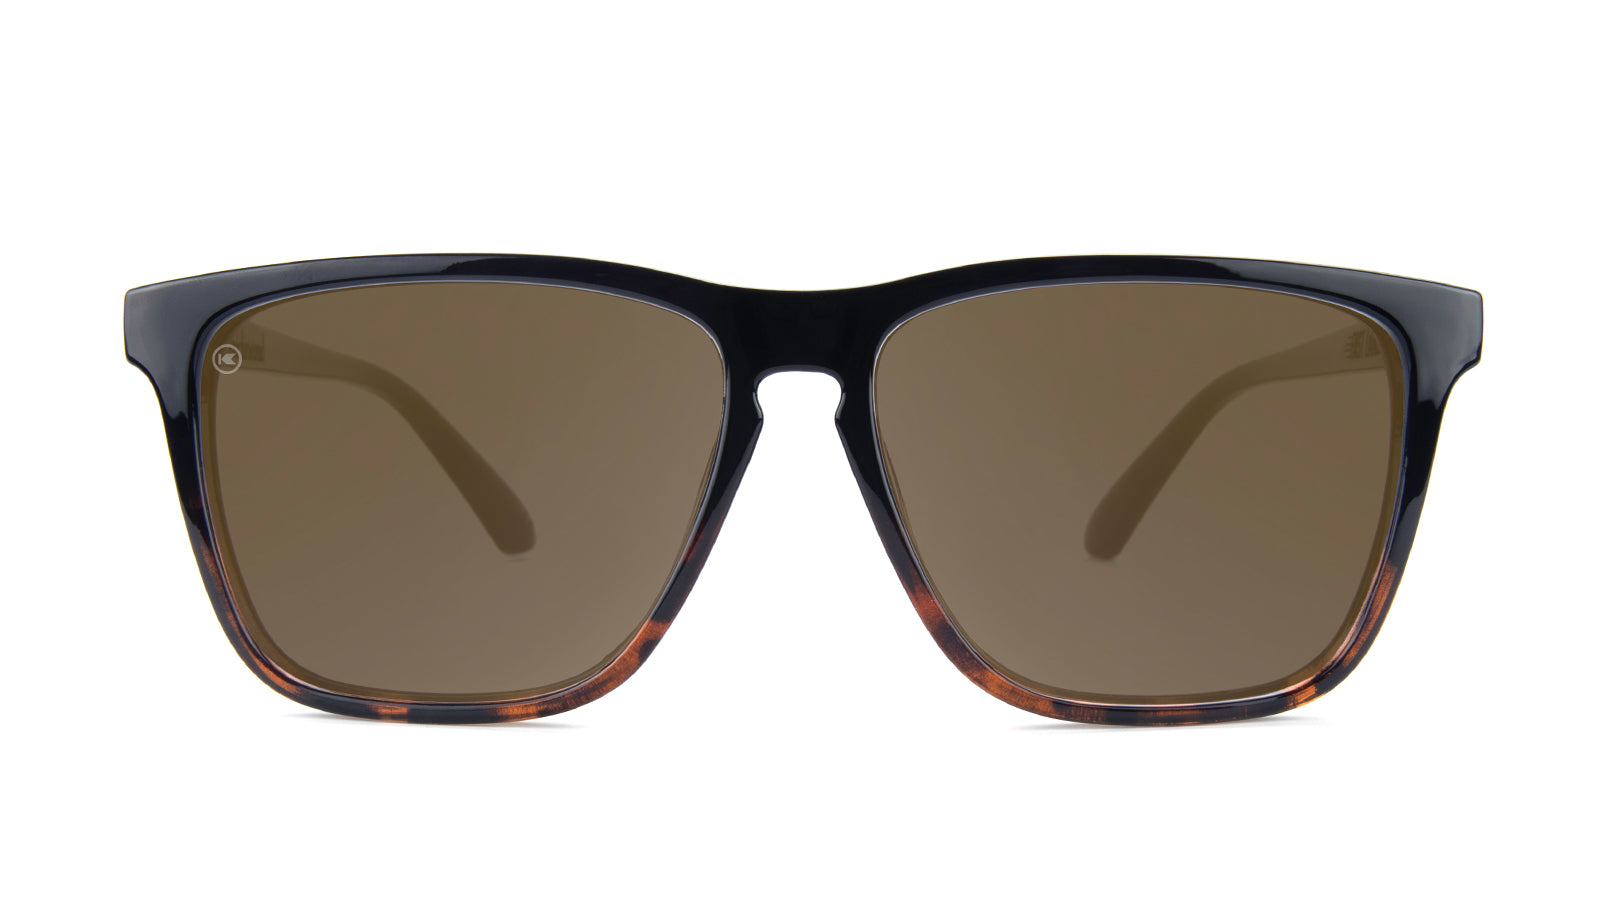 Buy Suncloud Dashboard Polarized Sunglasses Black Fade Frame at Amazon.in